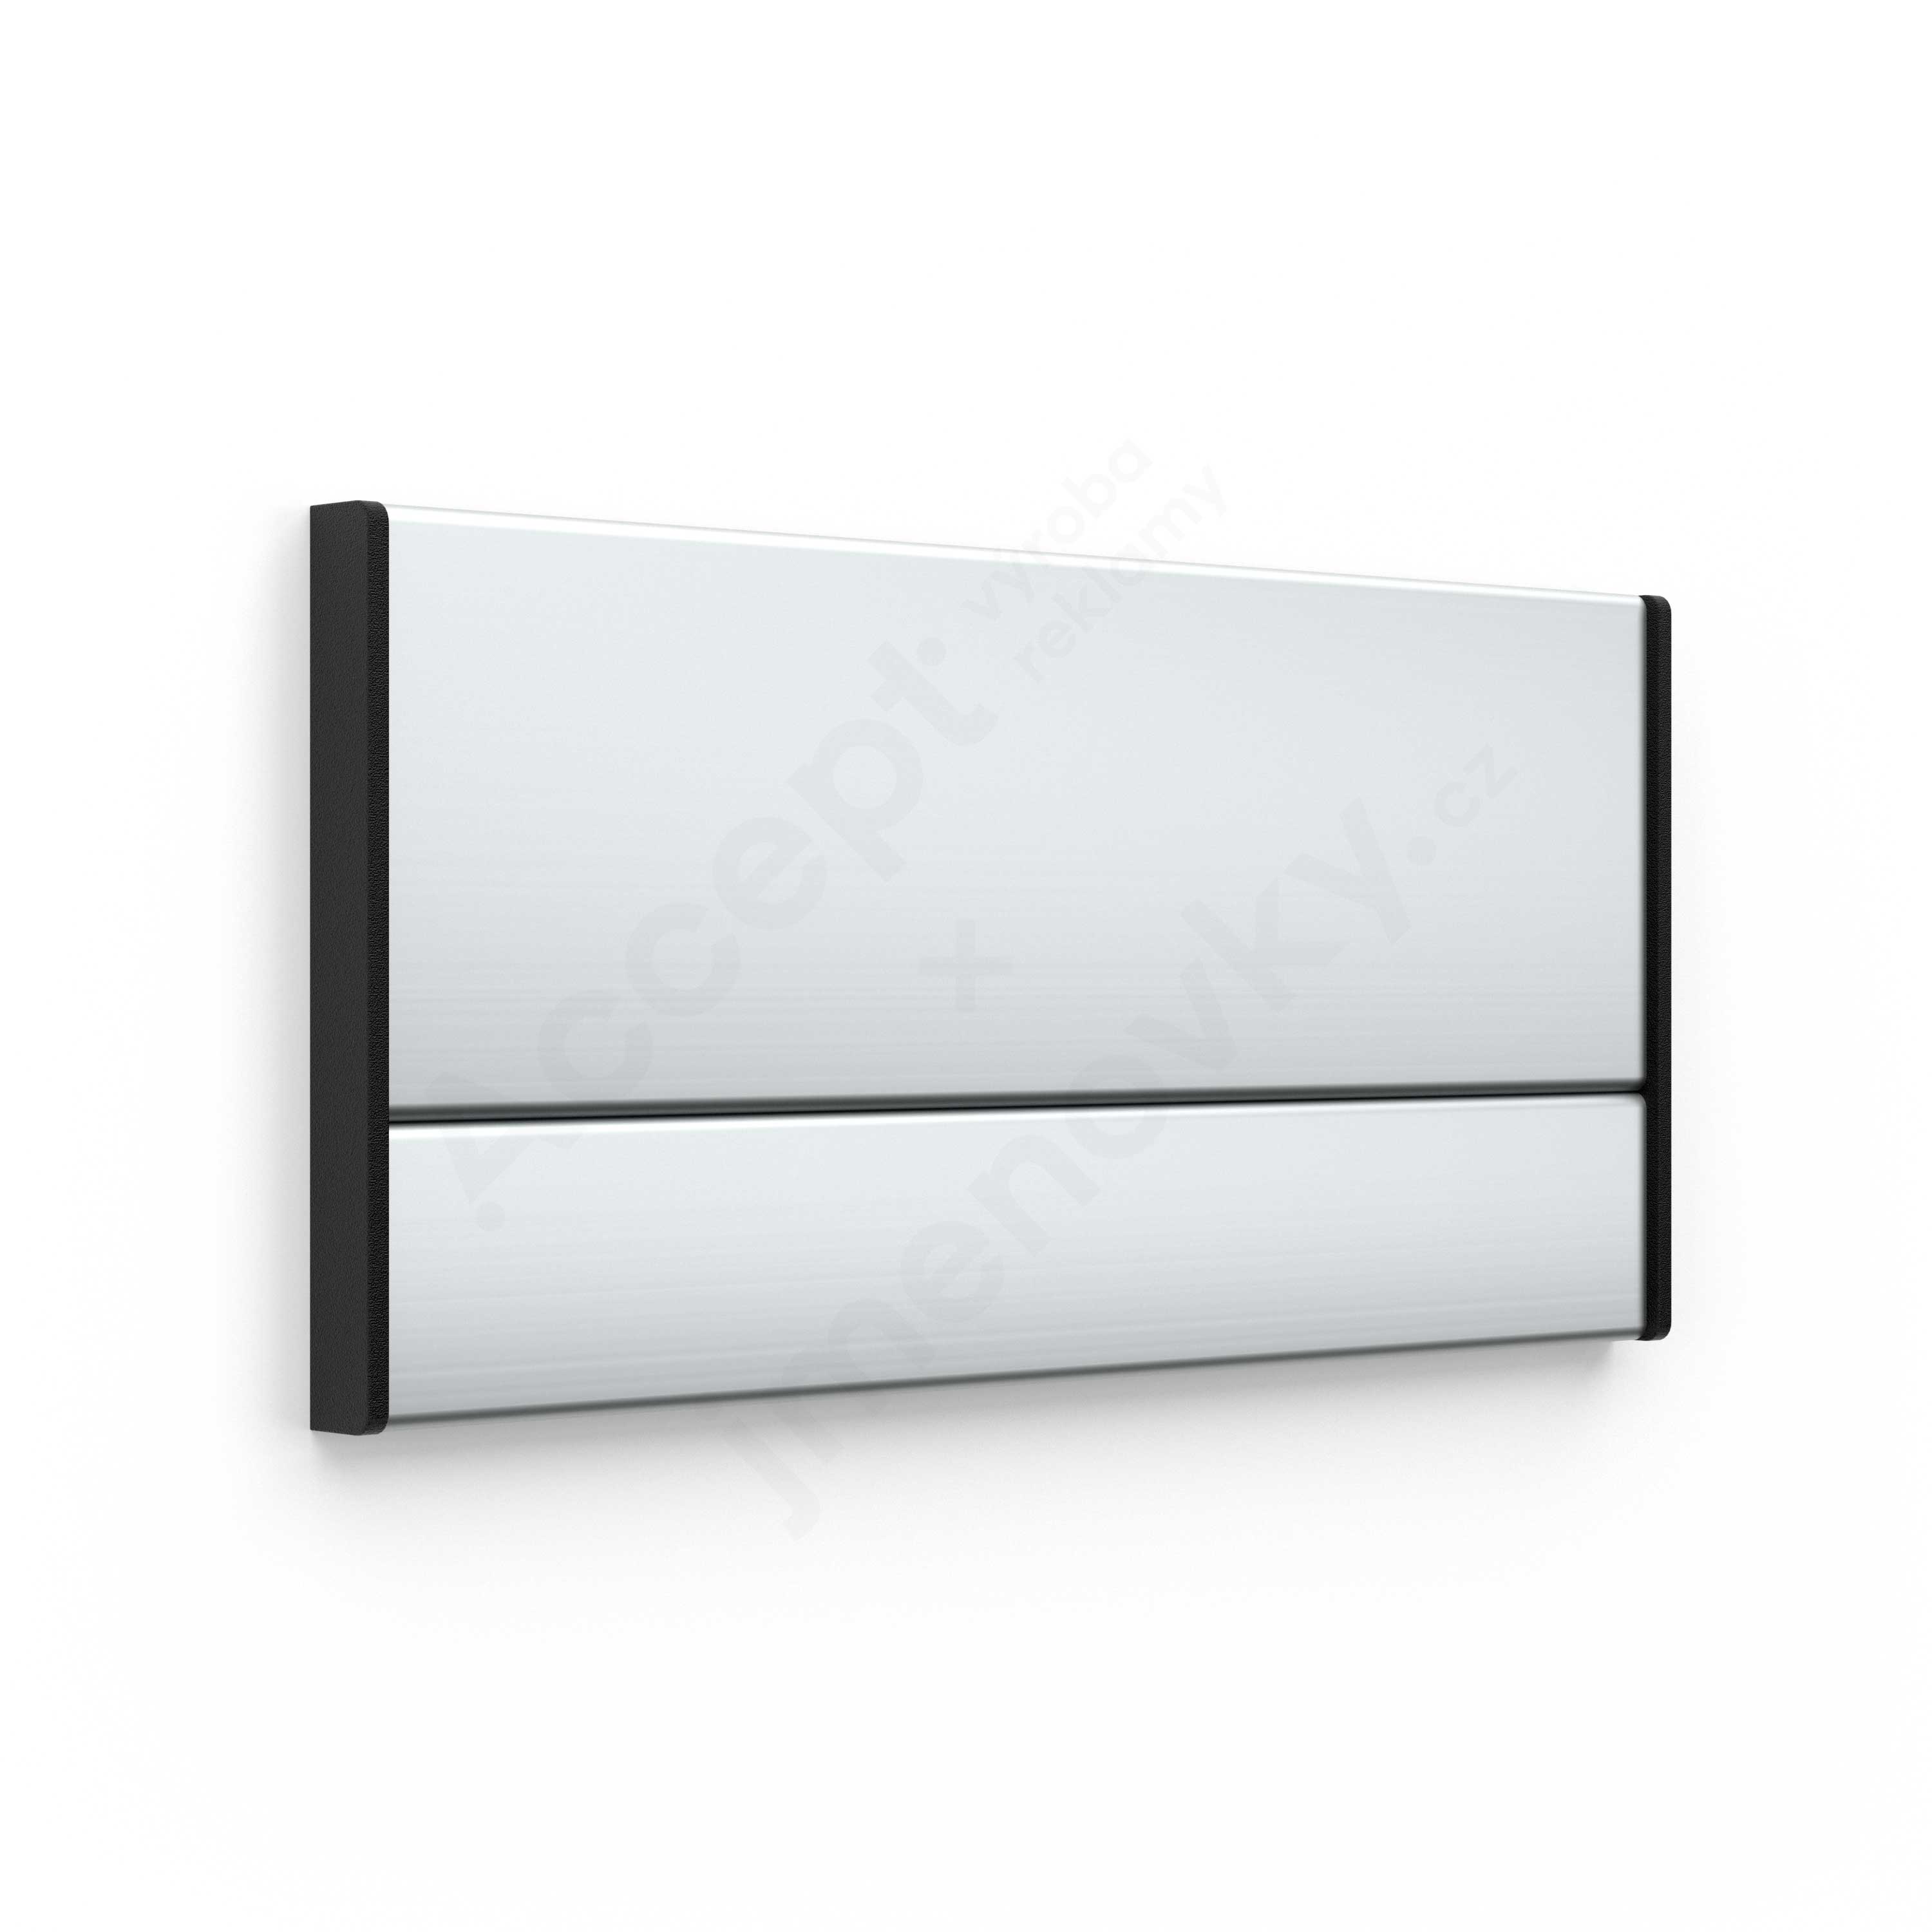 Dveřní tabulka ACS stříbrná (nezásuvný systém, 187 x 93 mm)